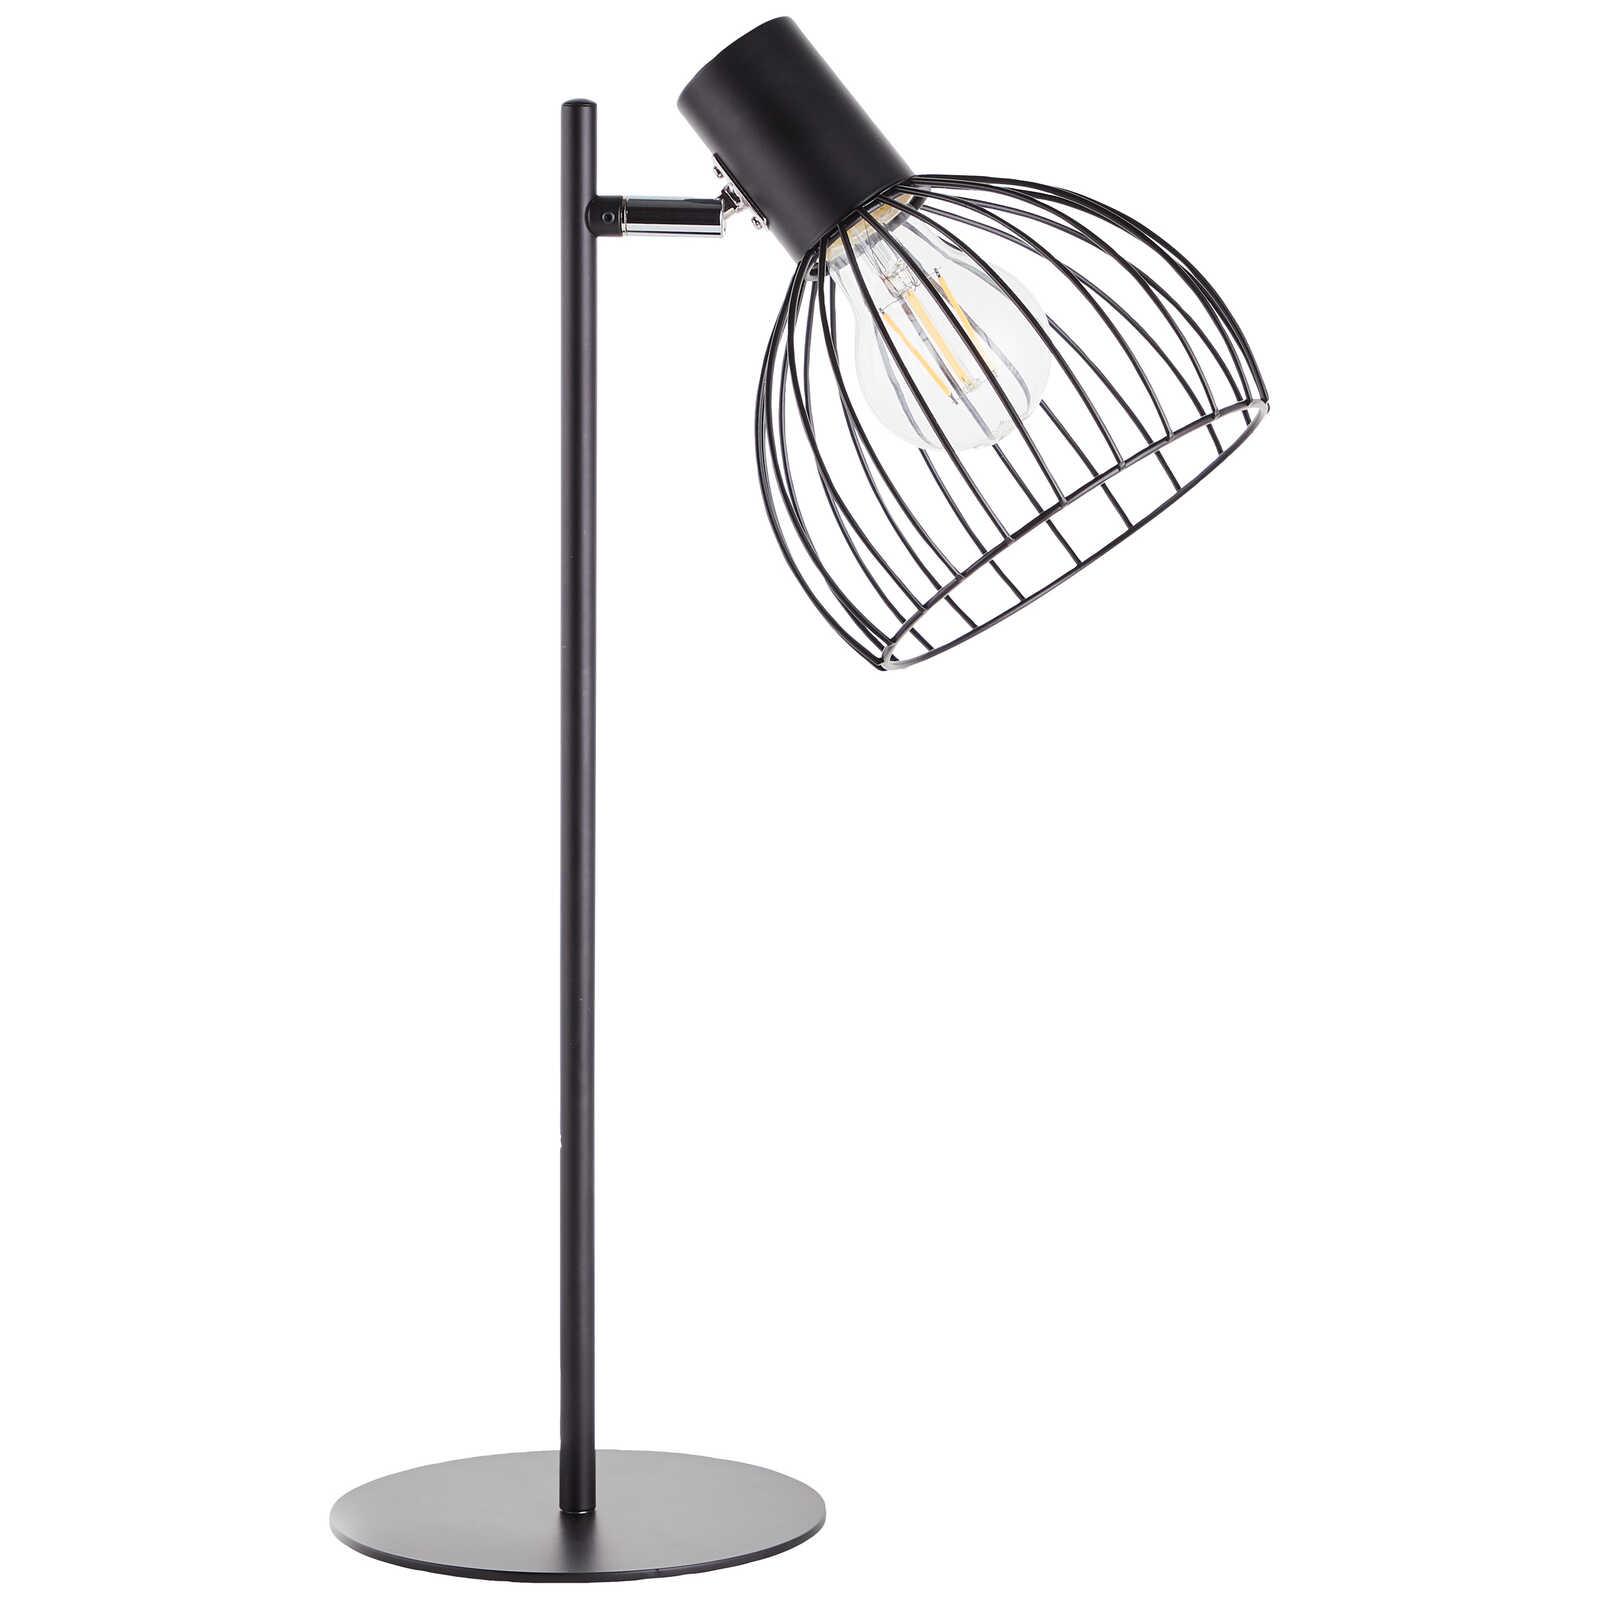             Lampe de table en métal - Bruno 1 - Noir
        